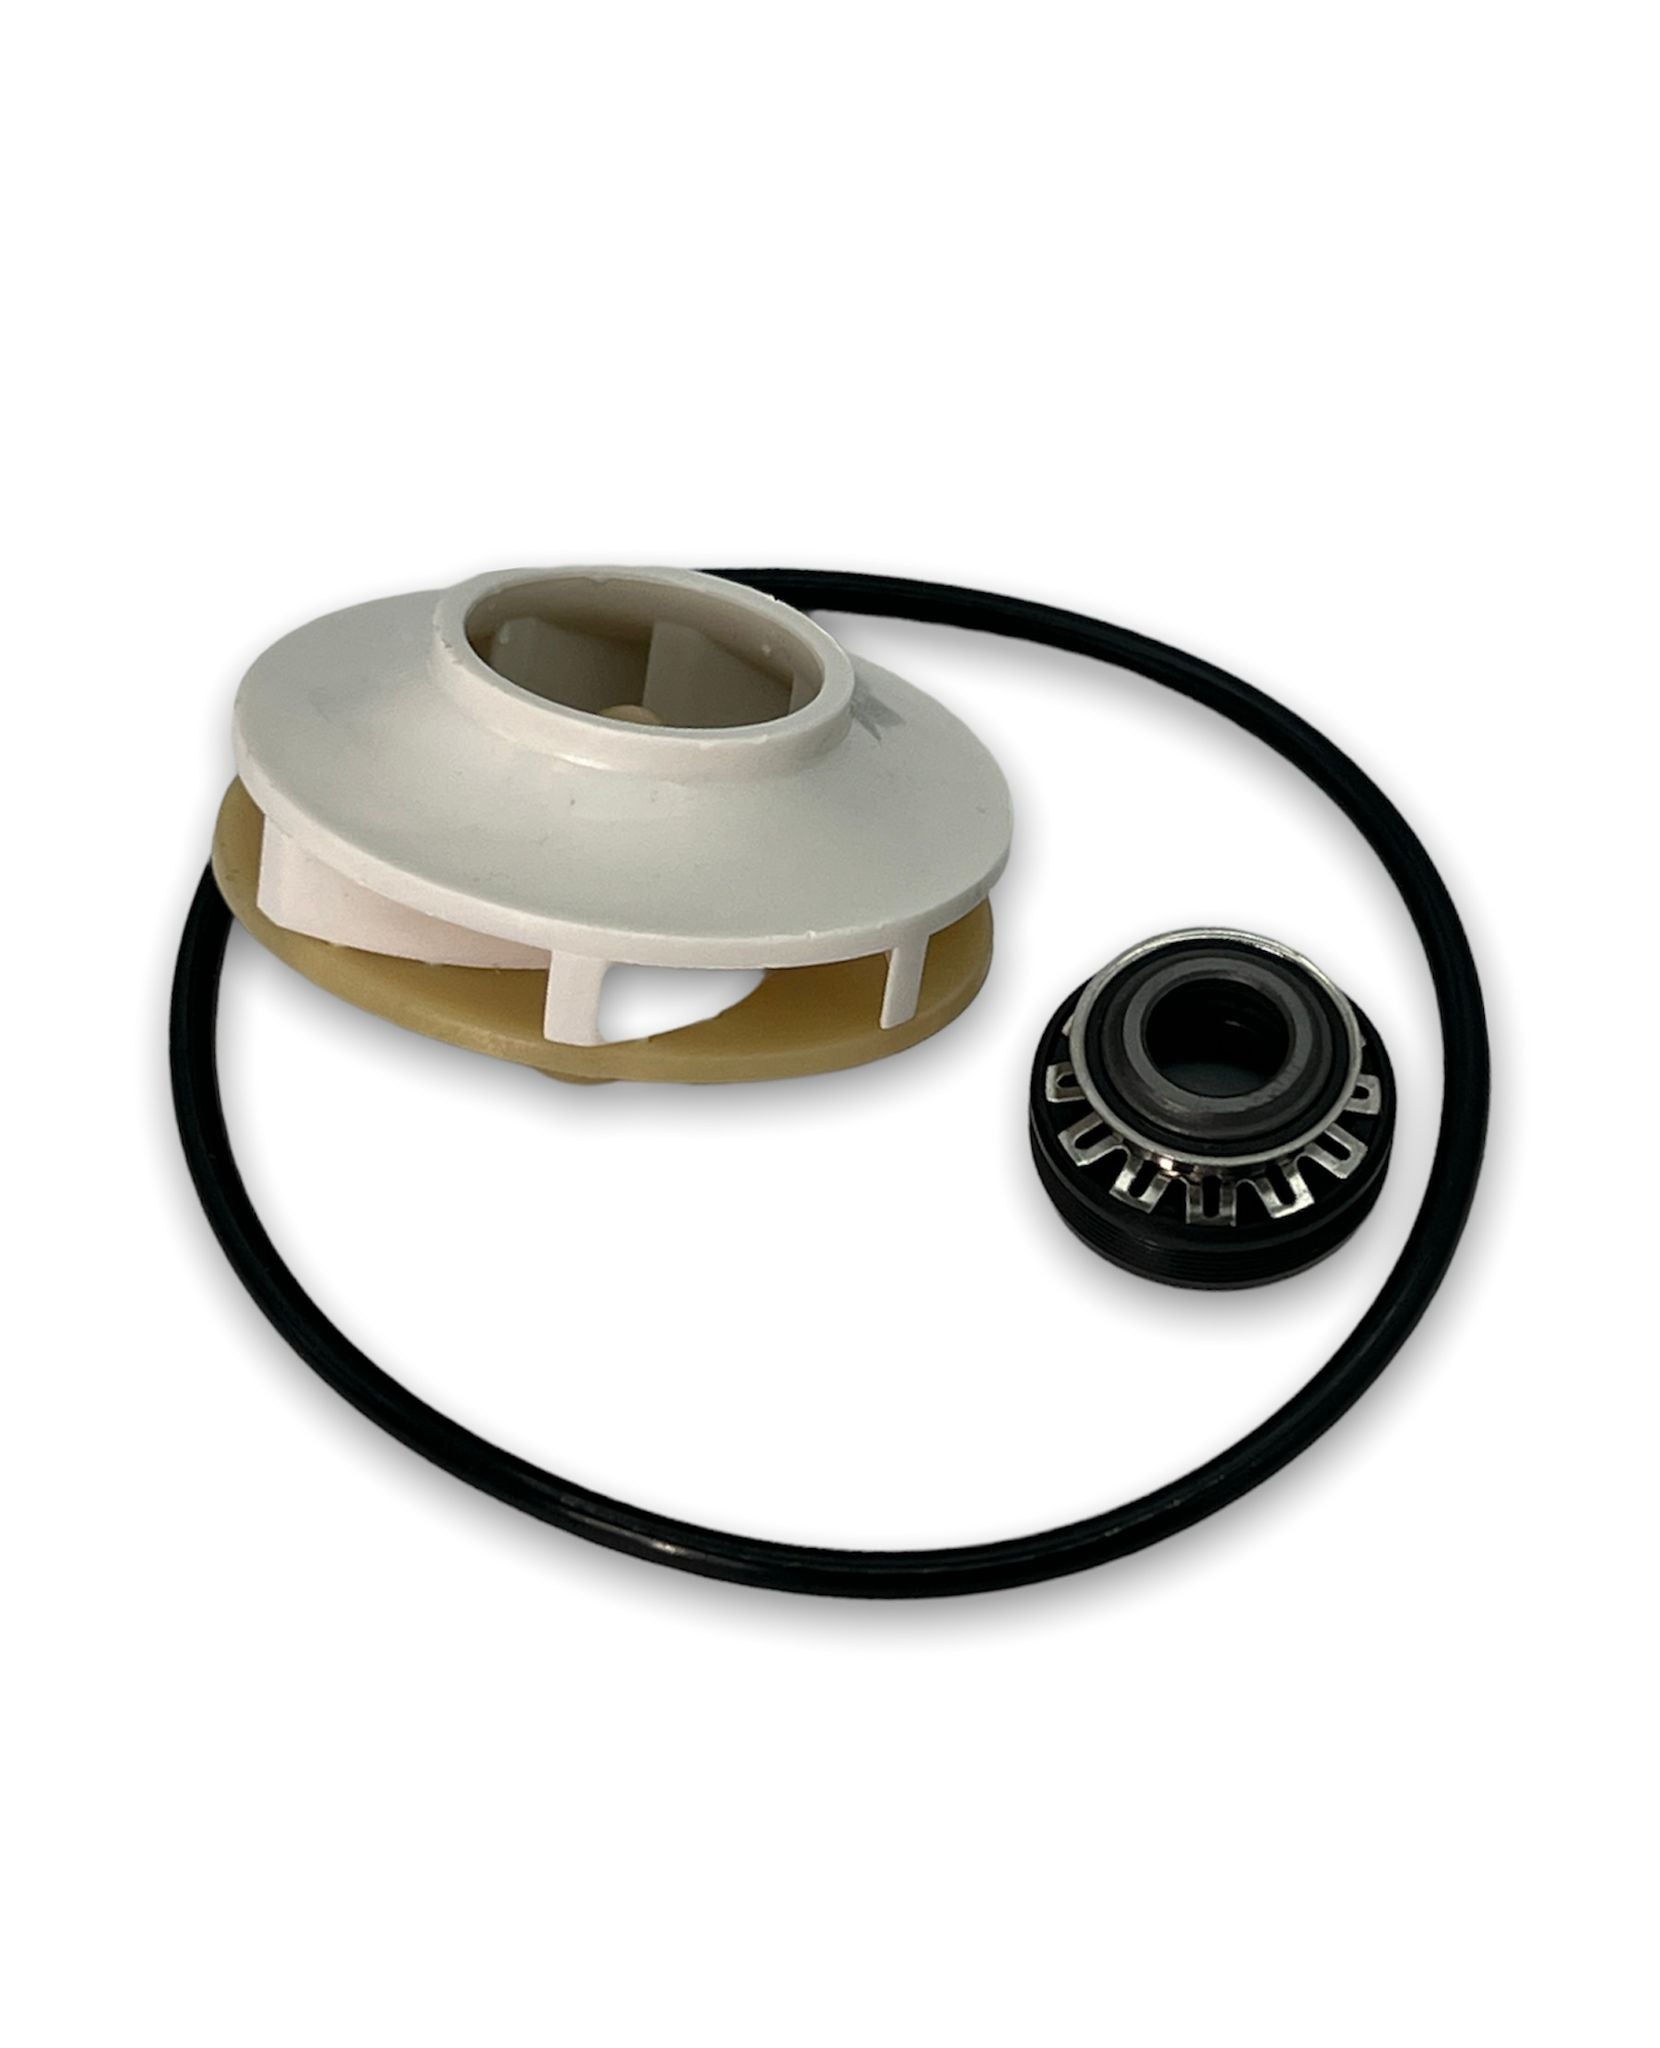 BOSCH Dishwasher Pump Impeller Repair Kit - 00419027. REPLACES: 10013913 419027 INVERTEC